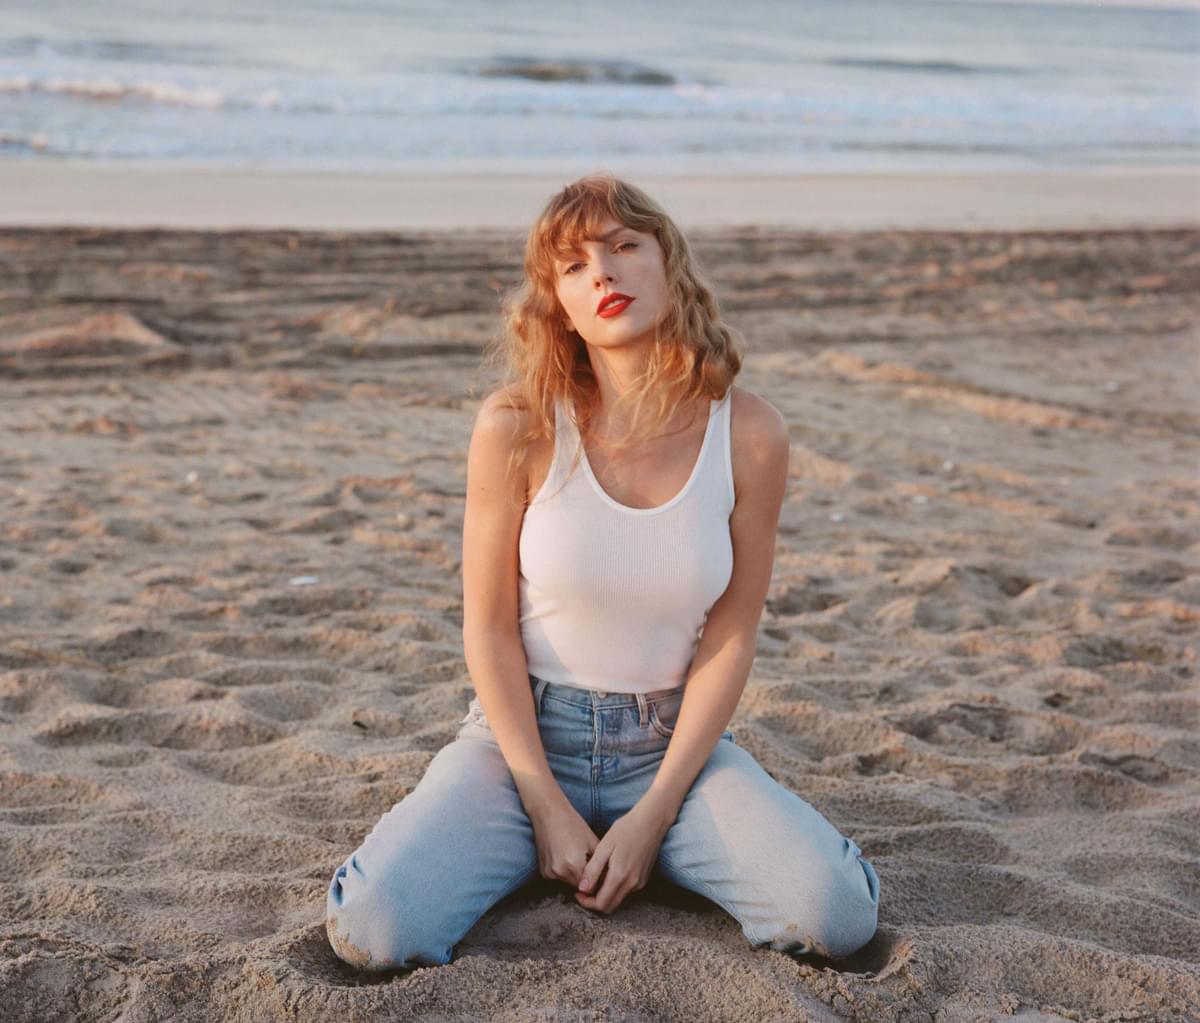 Taylor Swift 1989 Taylors Version Press Shot photocredit Beth Garrabrant